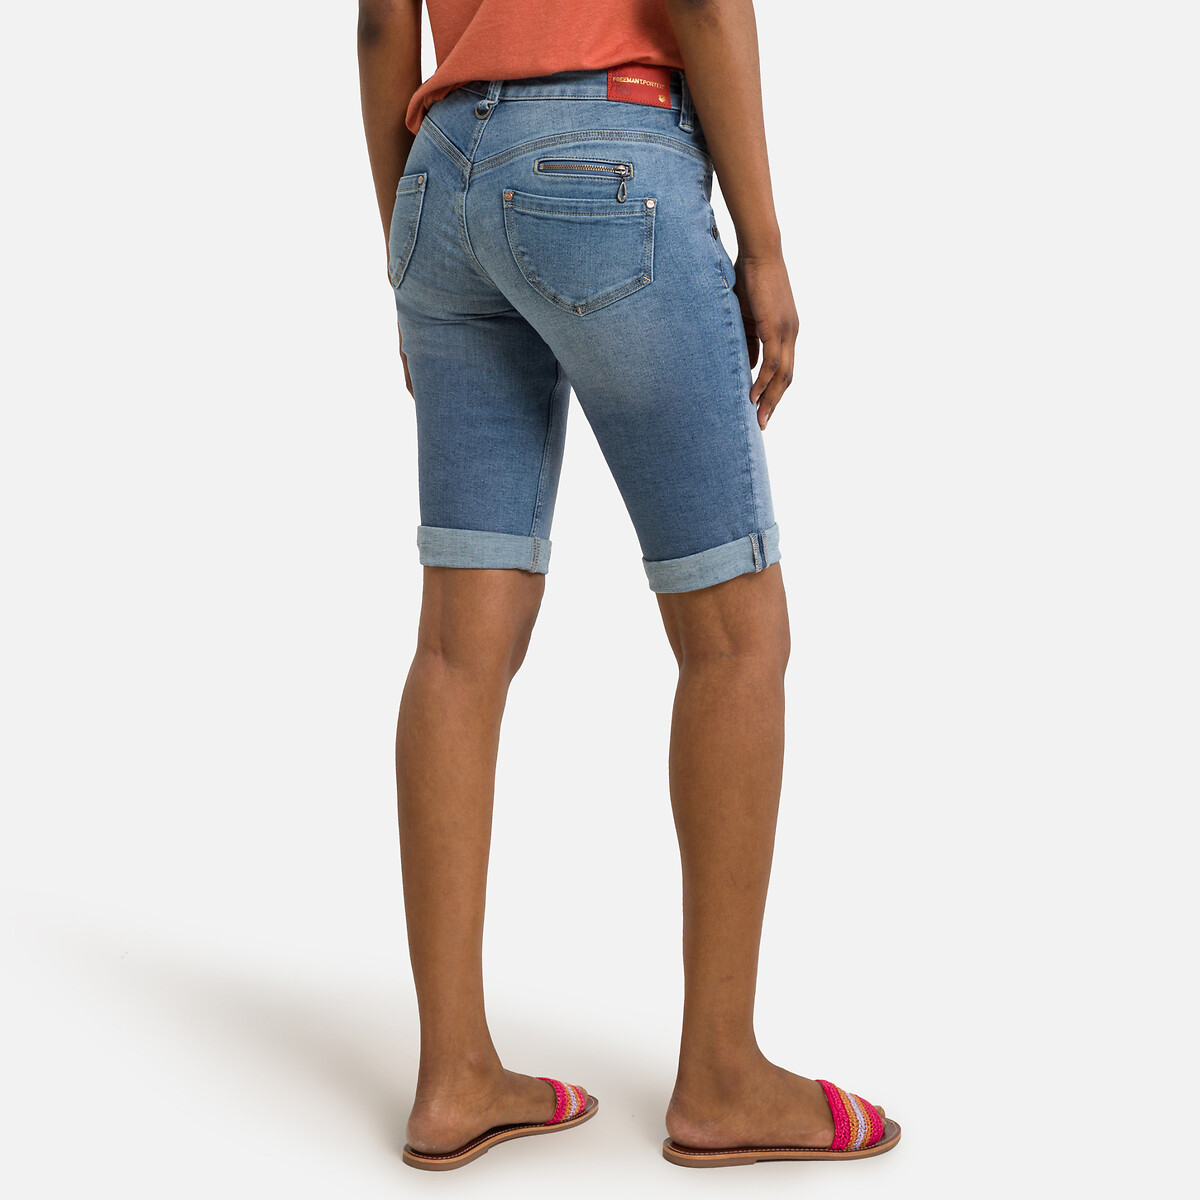 Бермуды Из джинсовой ткани L синий LaRedoute, размер L - фото 4